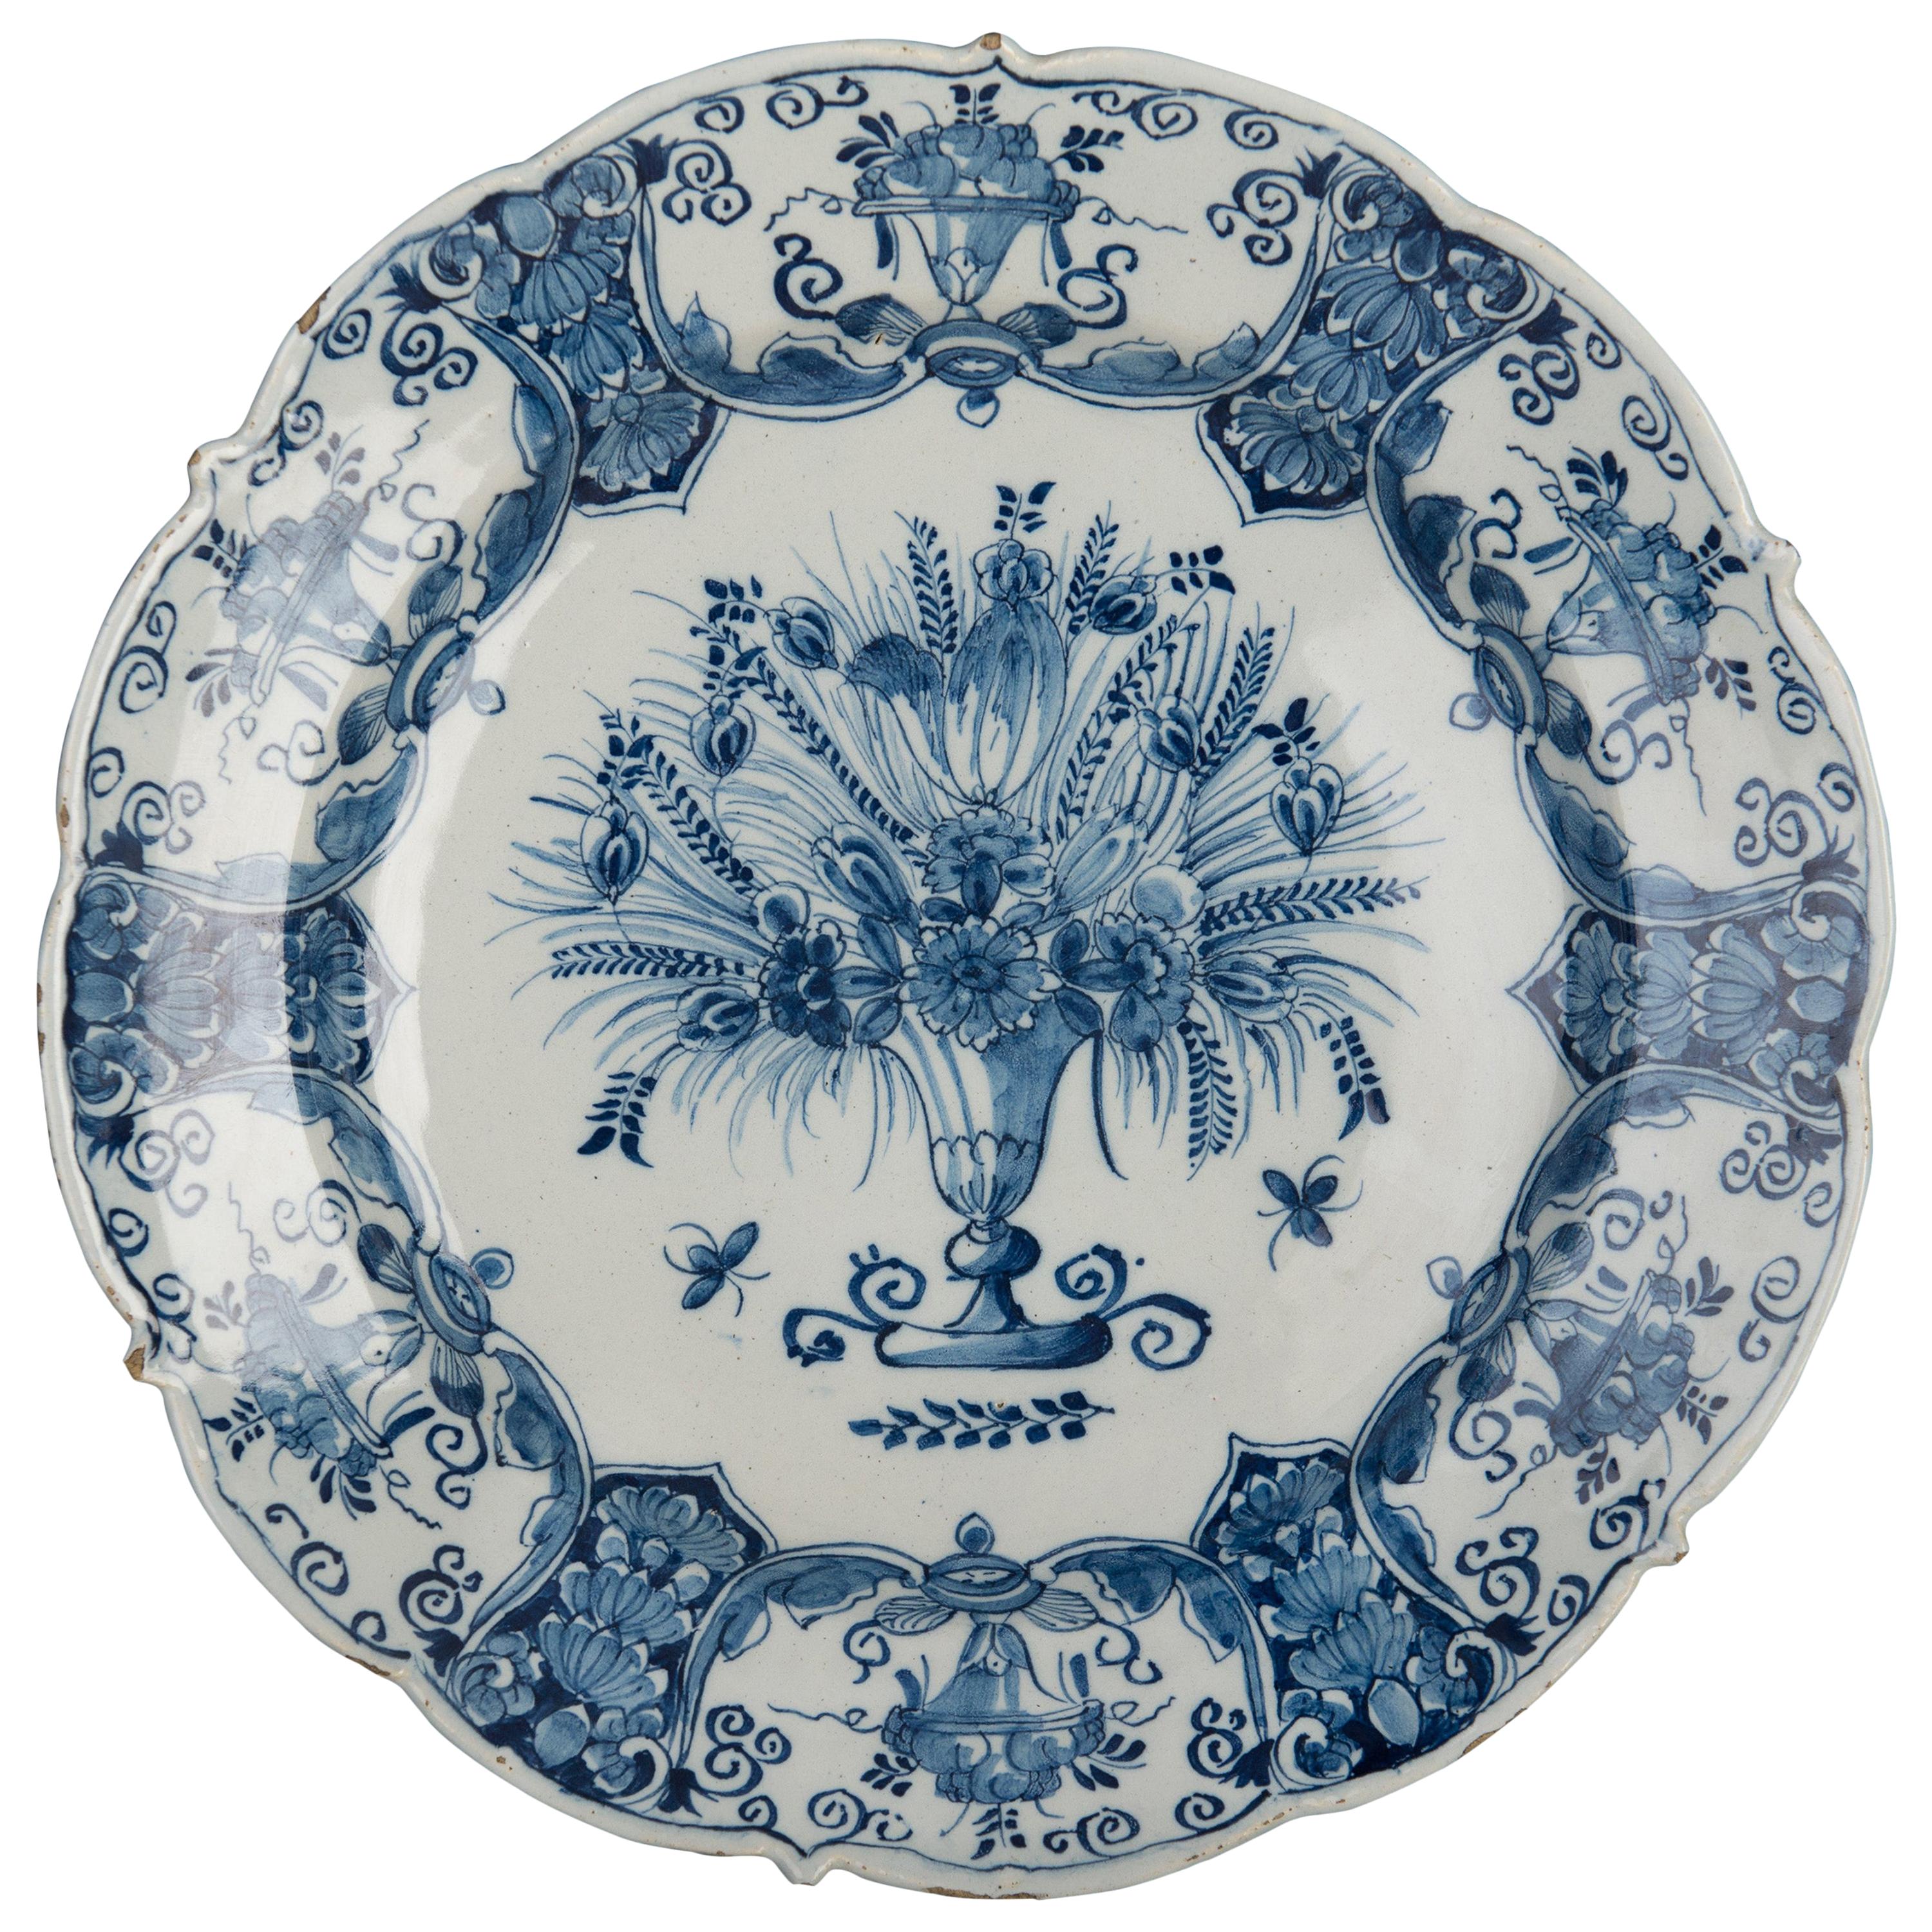 Grand plat bleu et blanc avec vase à fleurs de Delft, 1750, The Three Bells Pottery